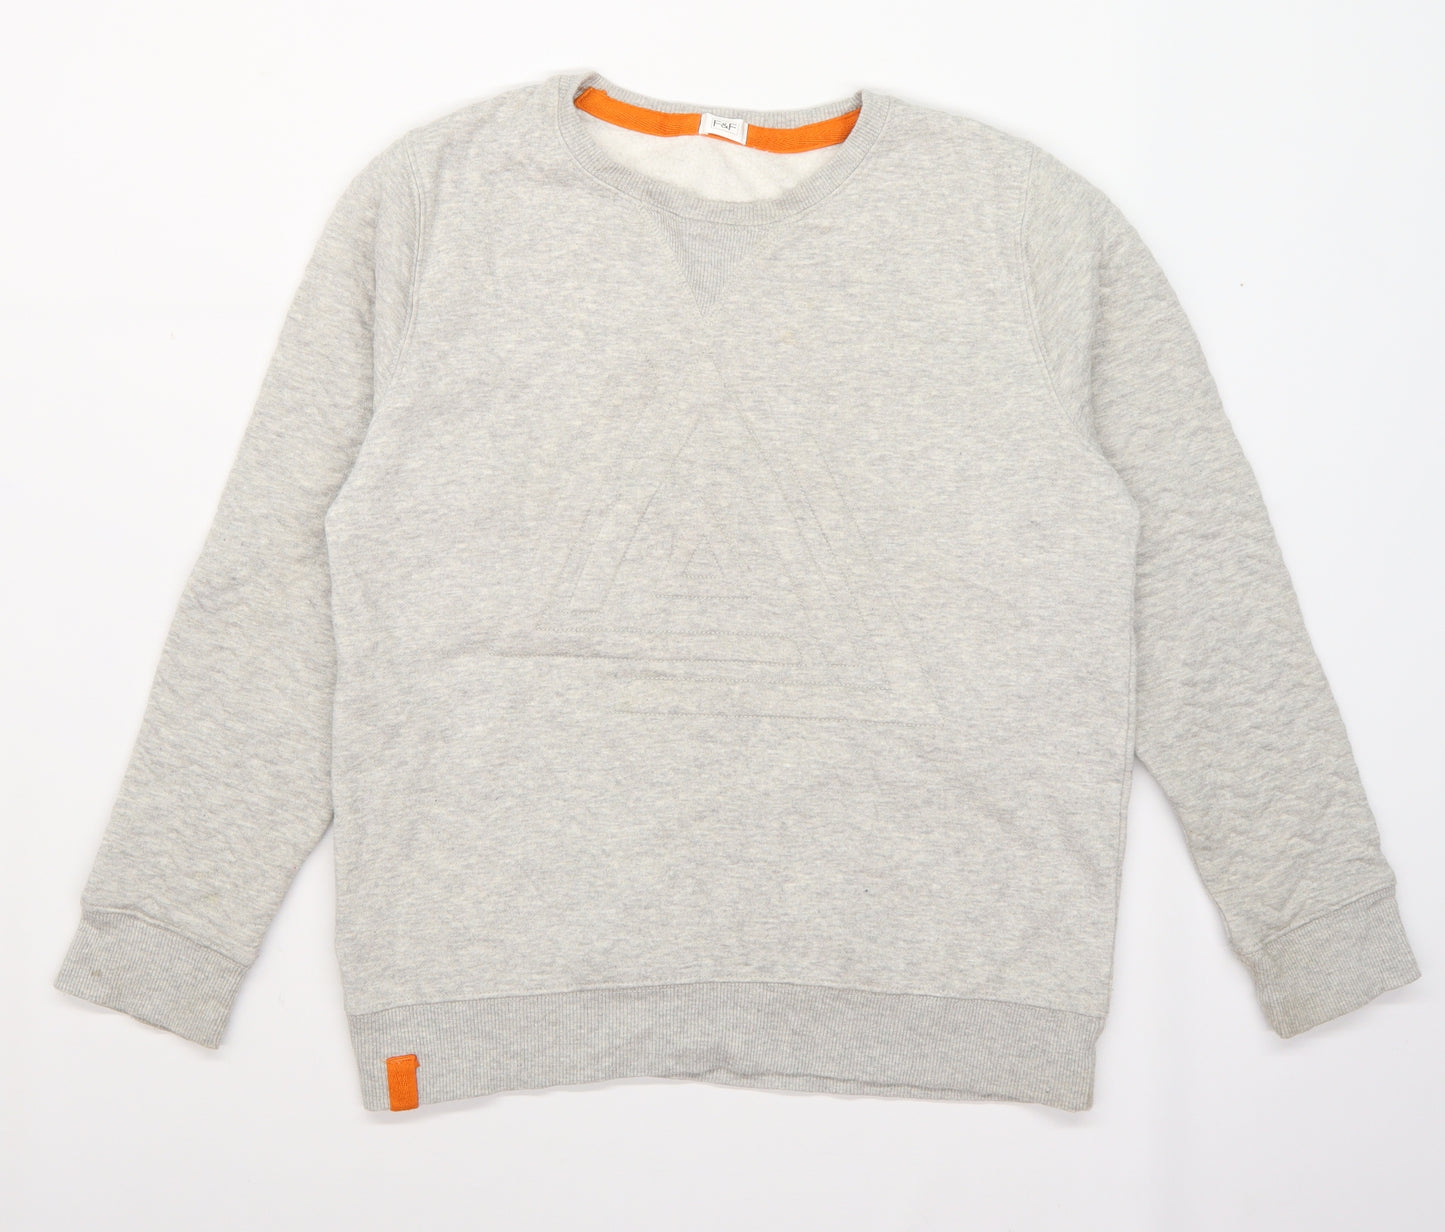 F&F Boys Grey Geometric Jersey Pullover Sweatshirt Size 11-12 Years